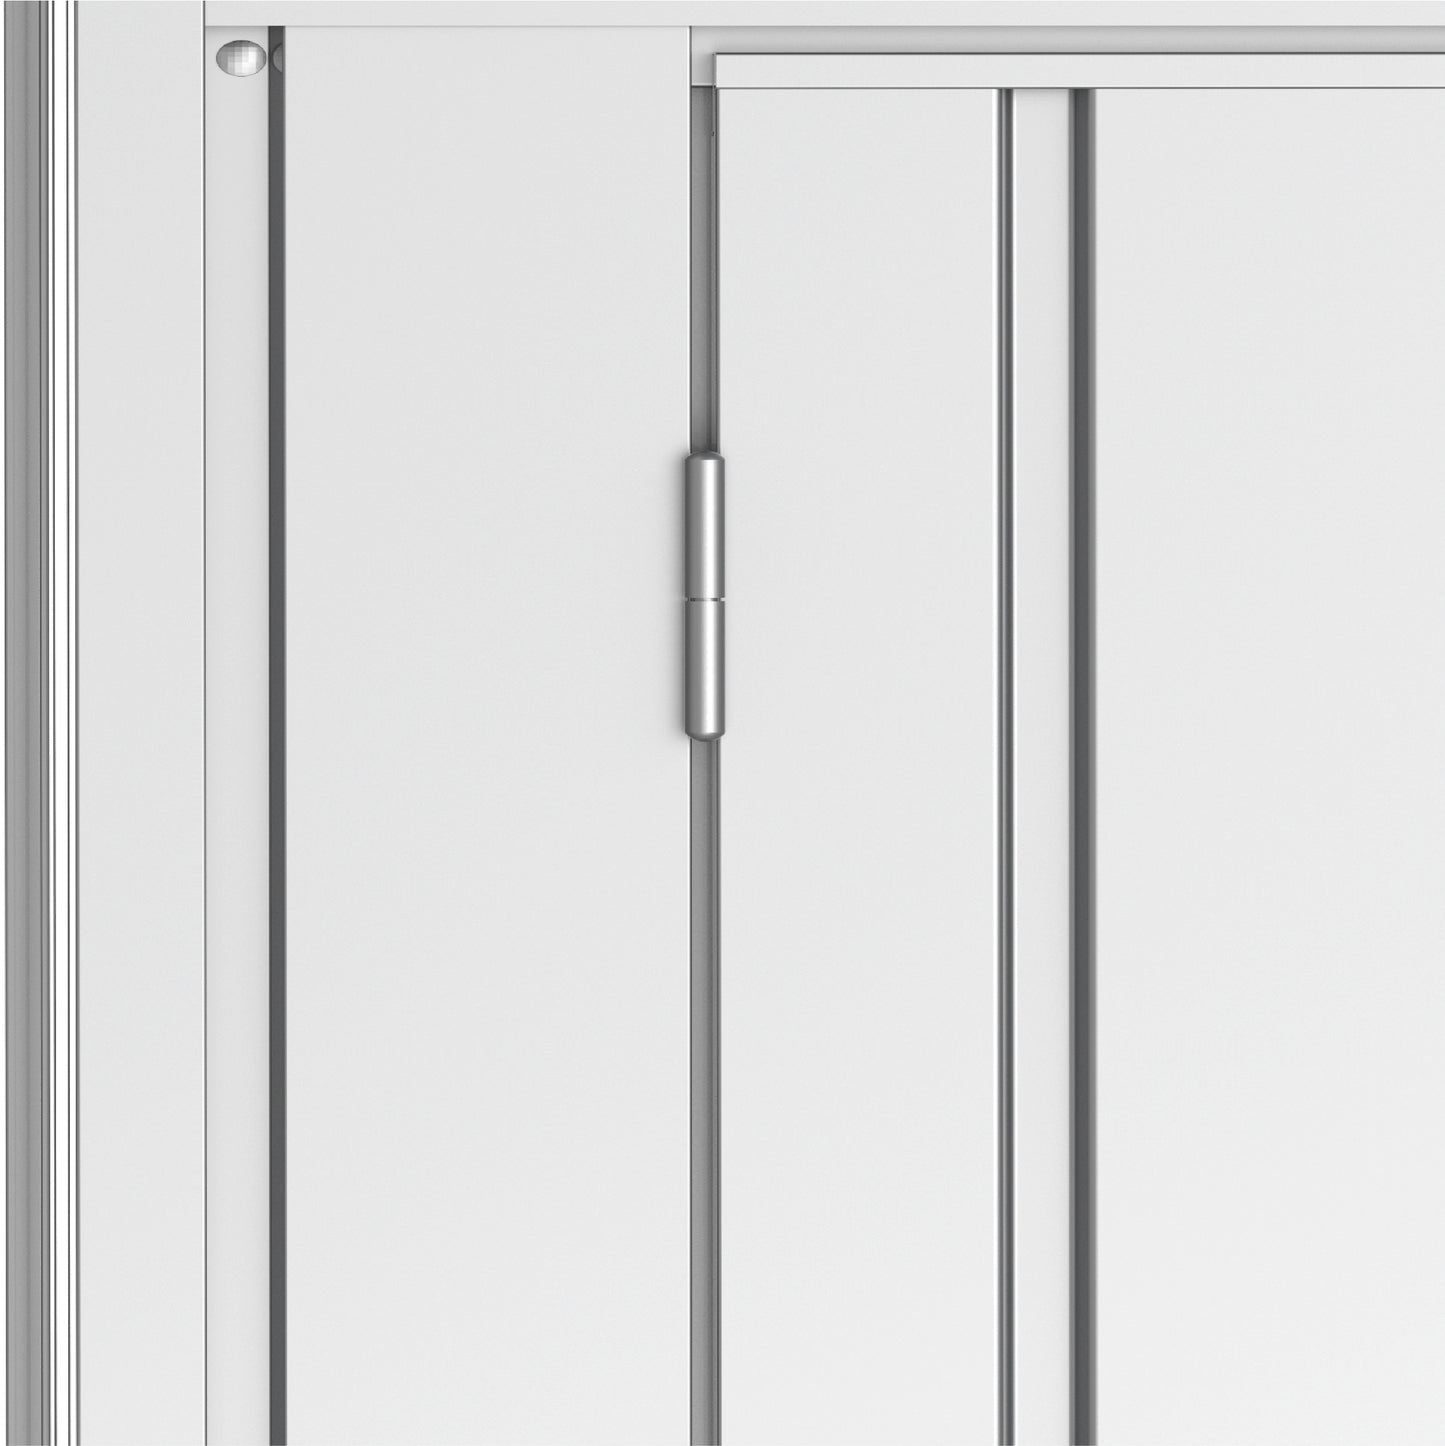 Palladium Steel High Store Lockers Double Doors Cabinets